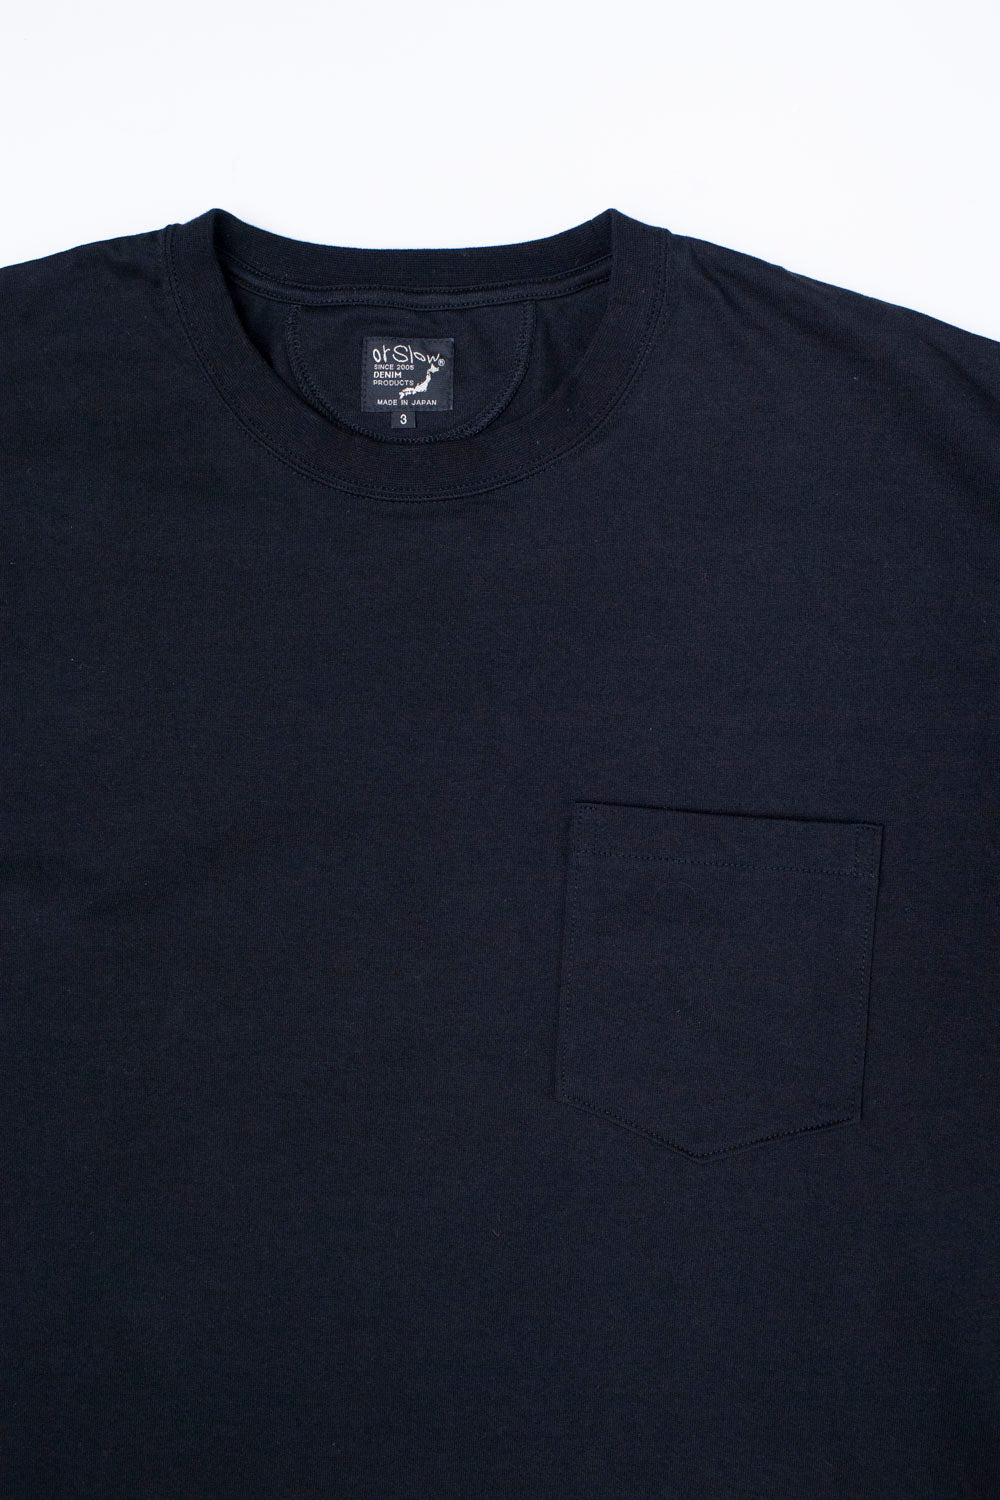 03-0017-61 - Pocket T-Shirt - Black